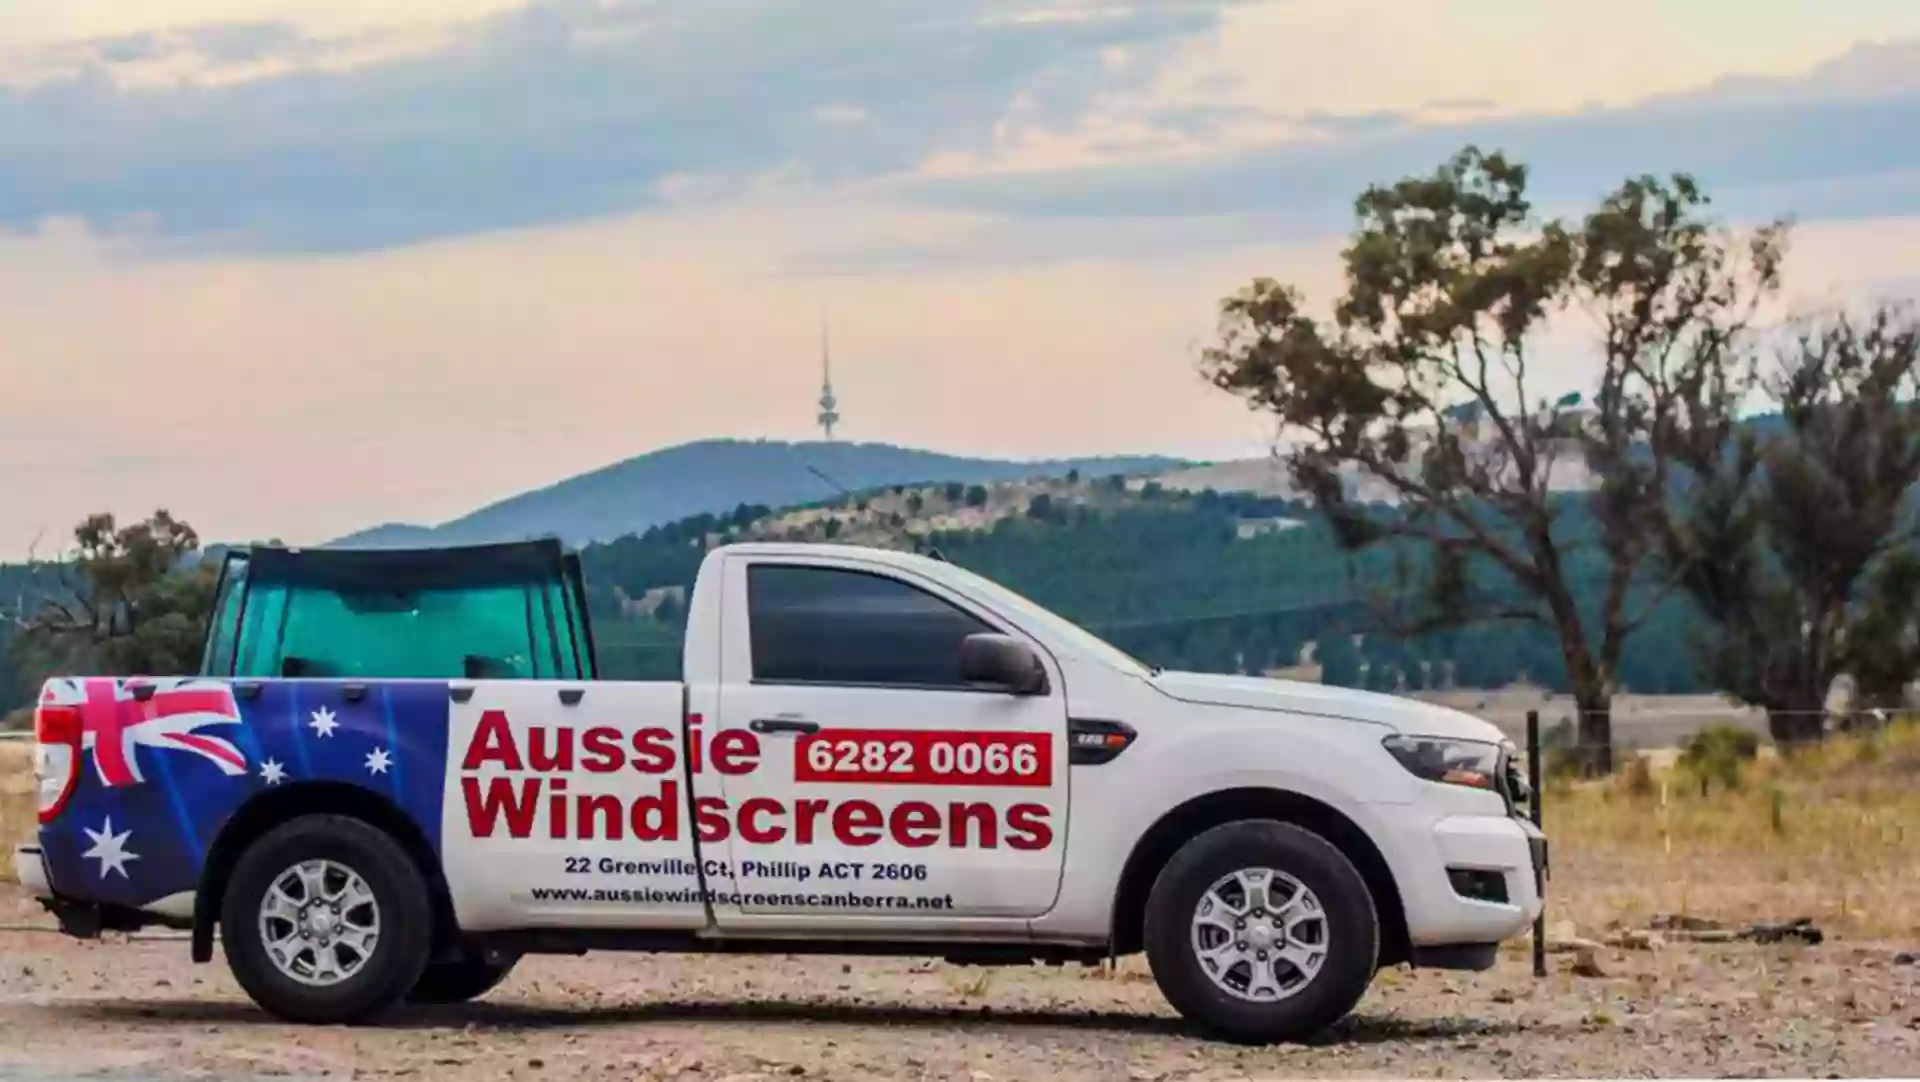 Aussie Windscreens